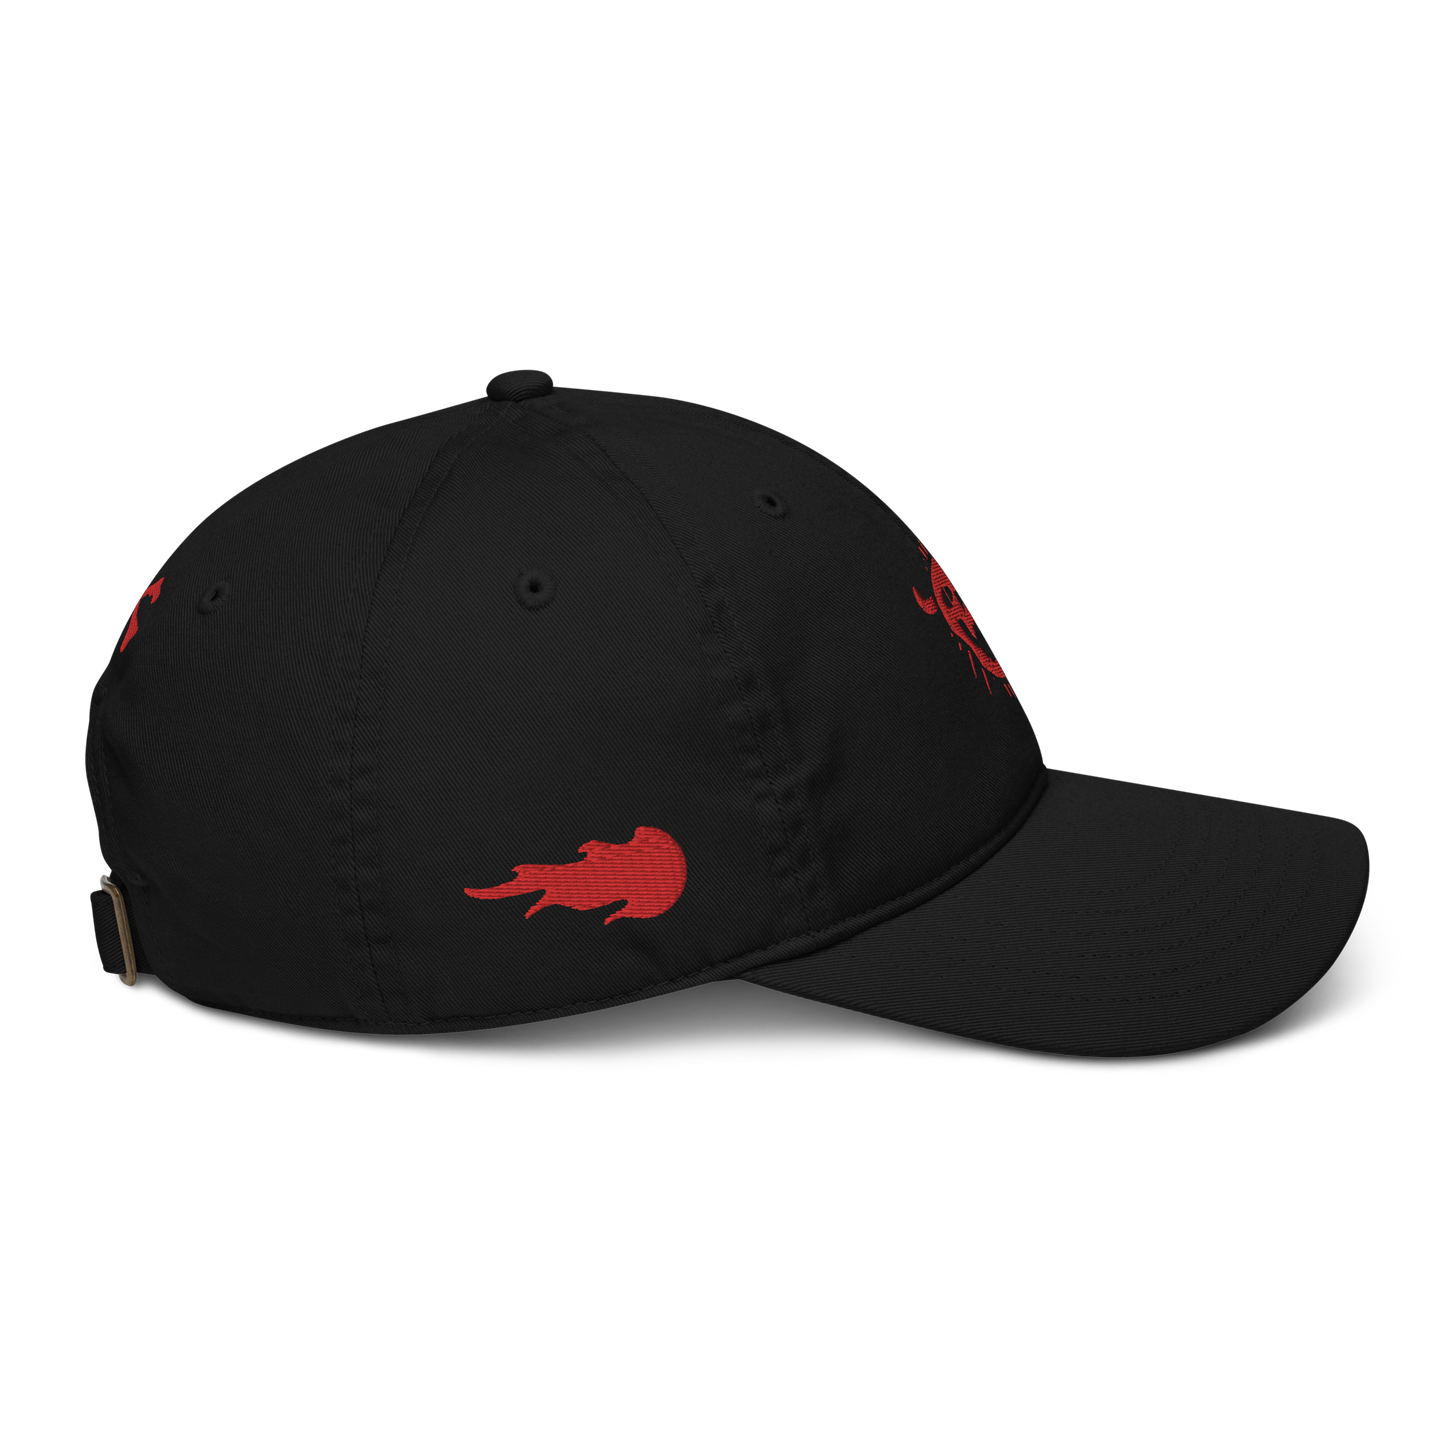 The Crimson Firebrand Cap